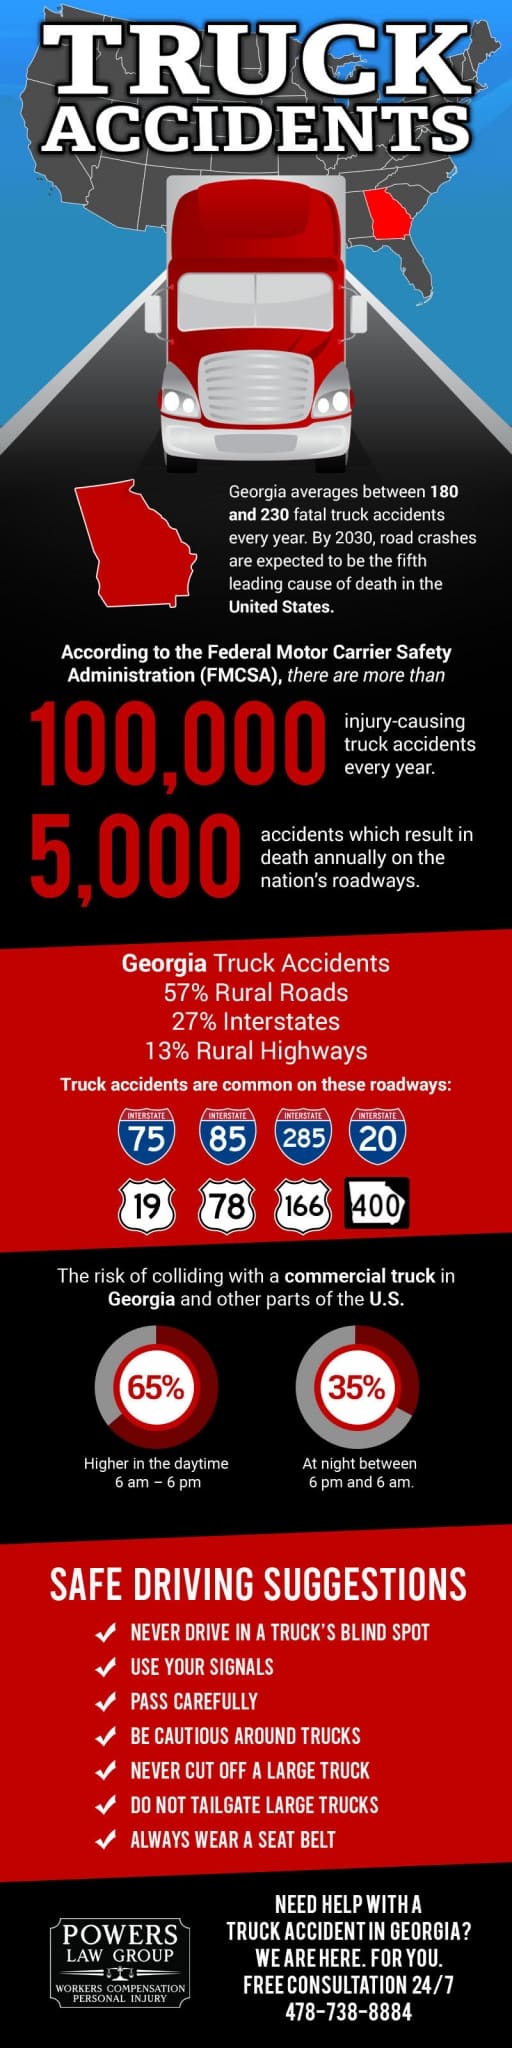 Truck Accidents in Georgia